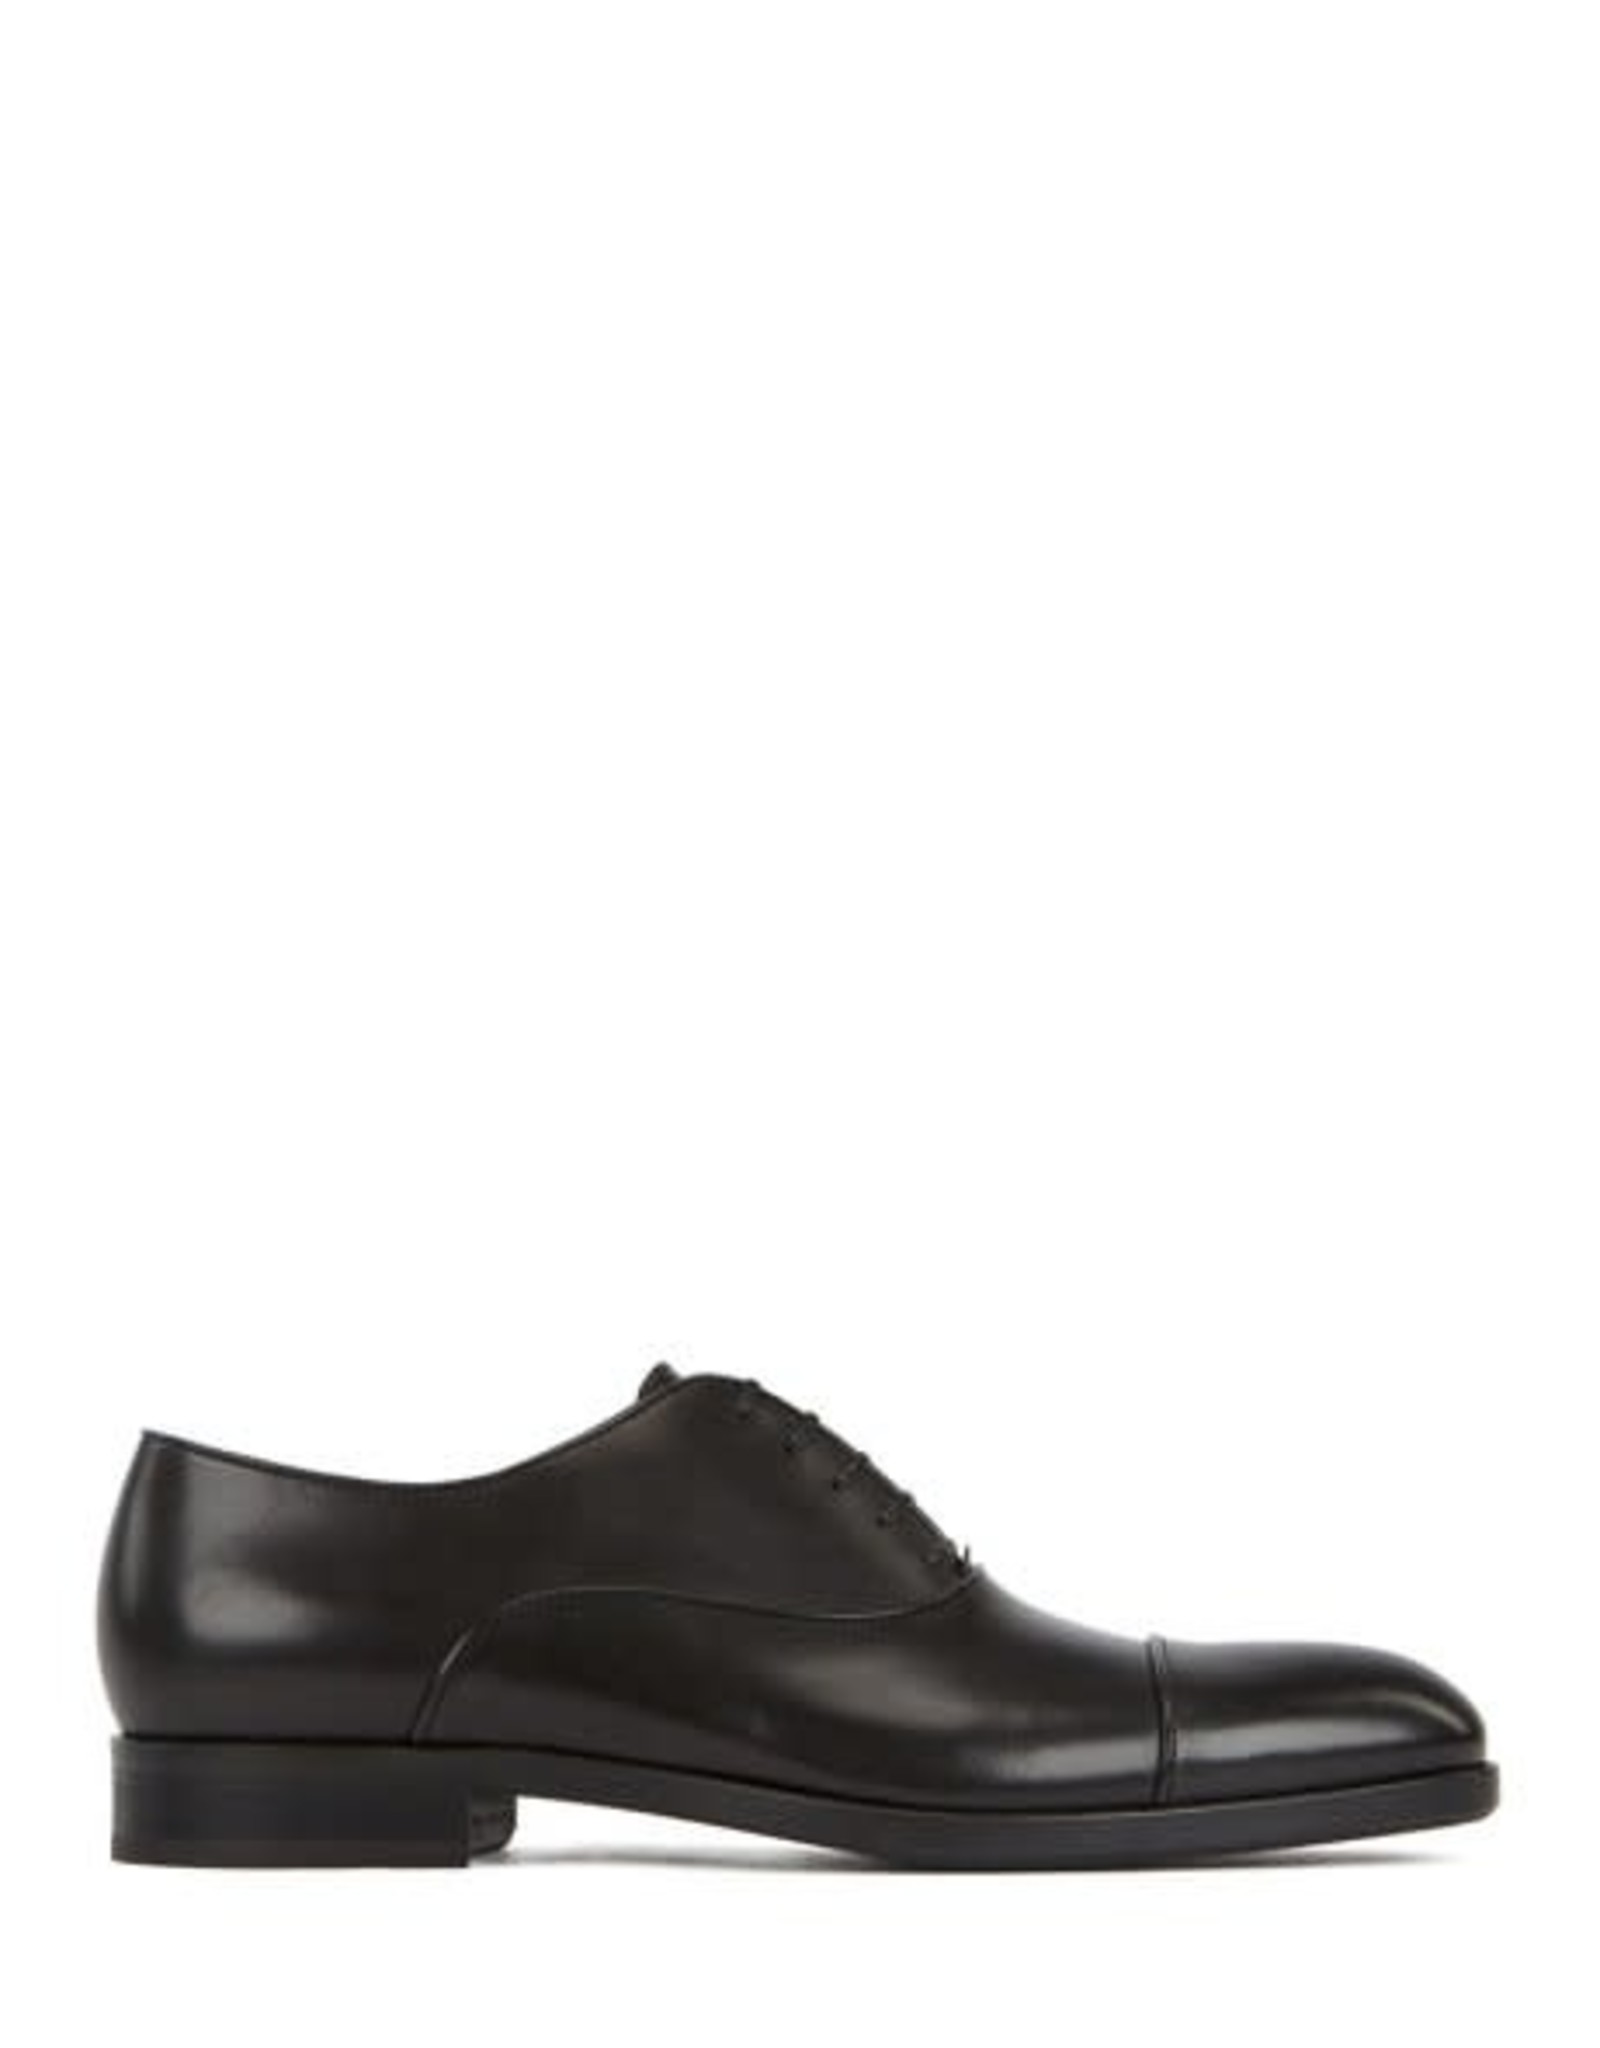 Hugo Boss Oxford Dress Shoe - Colpitts 